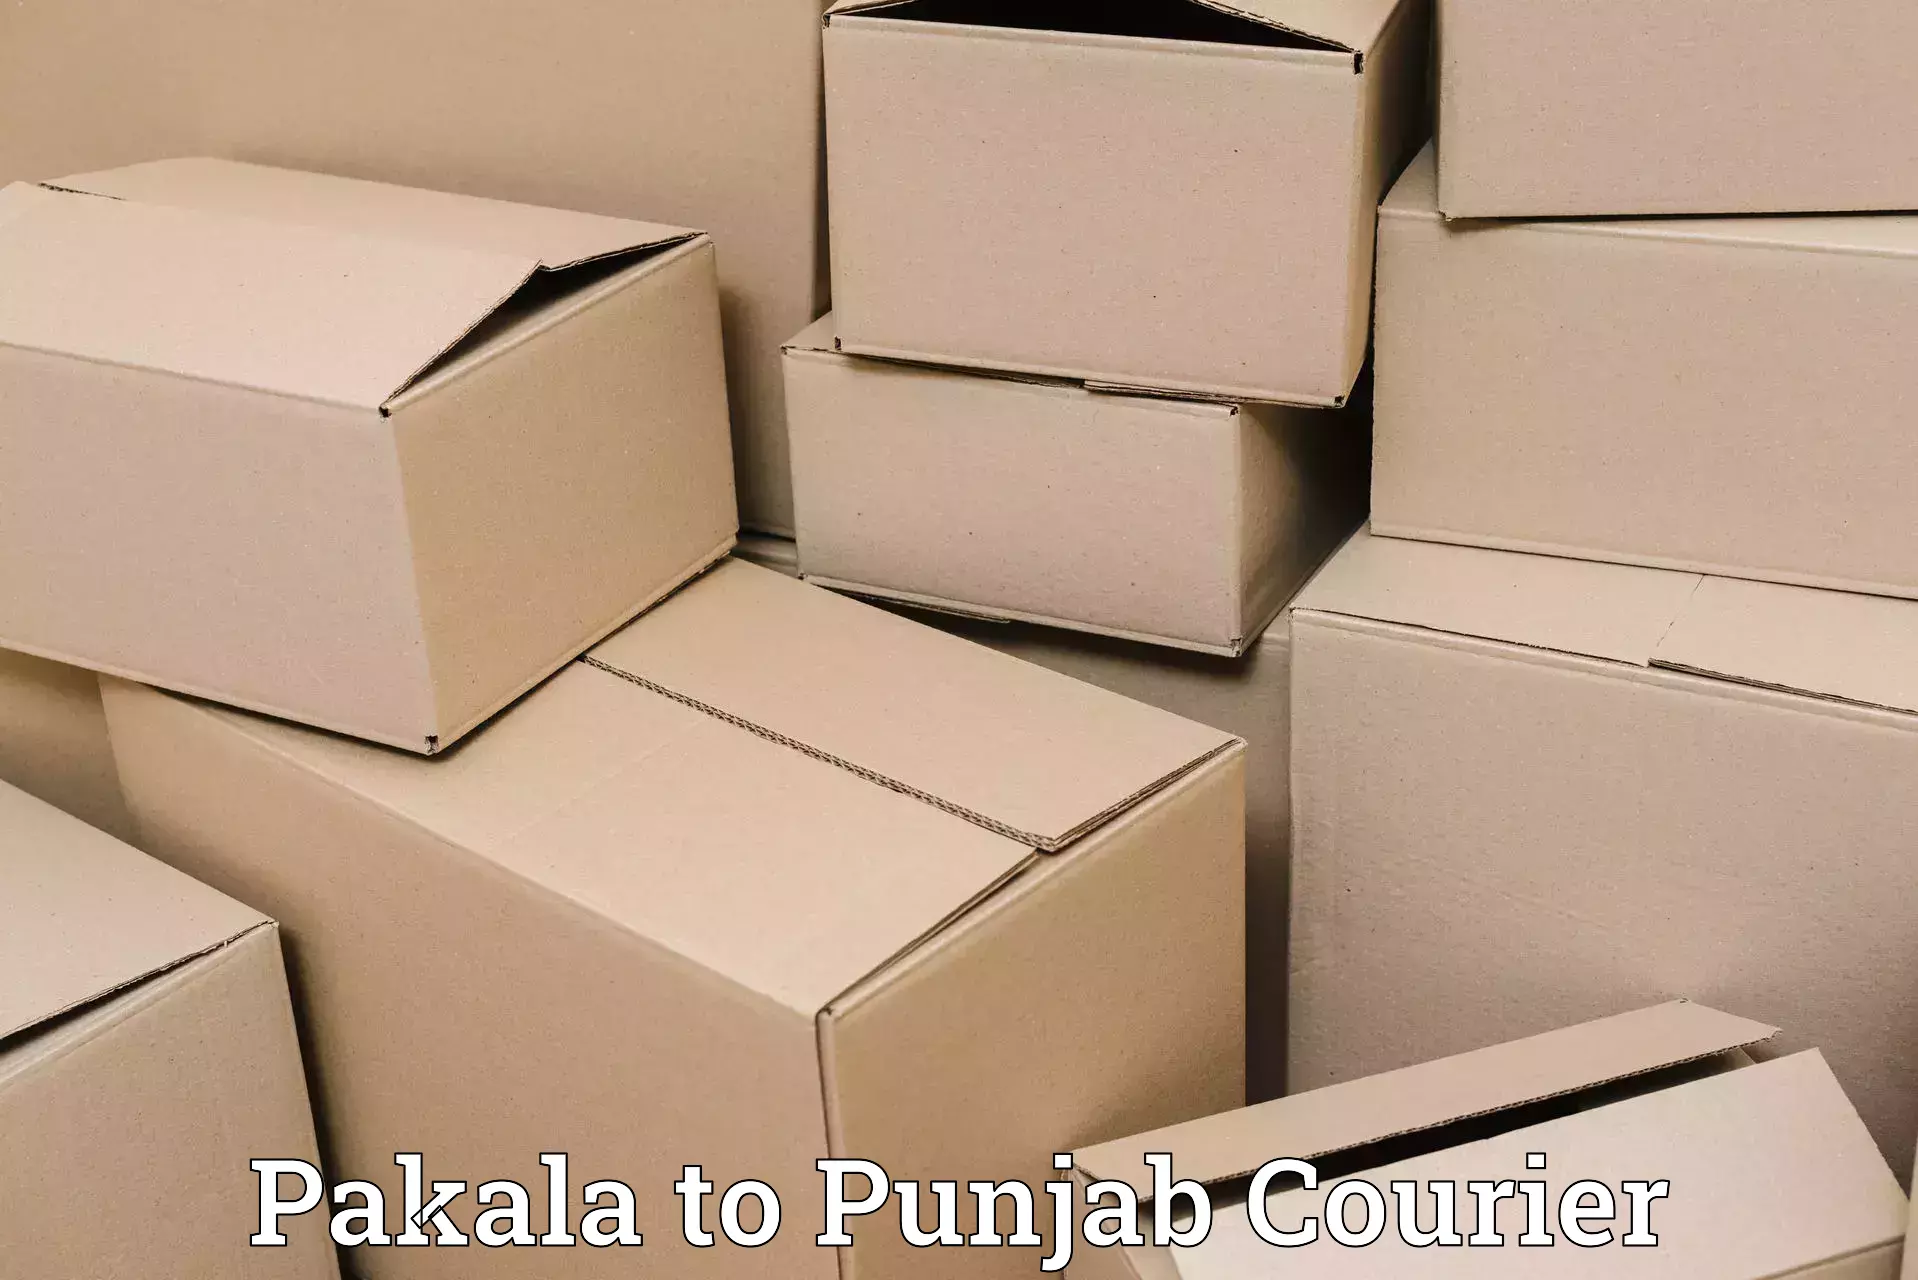 Easy access courier services Pakala to Faridkot